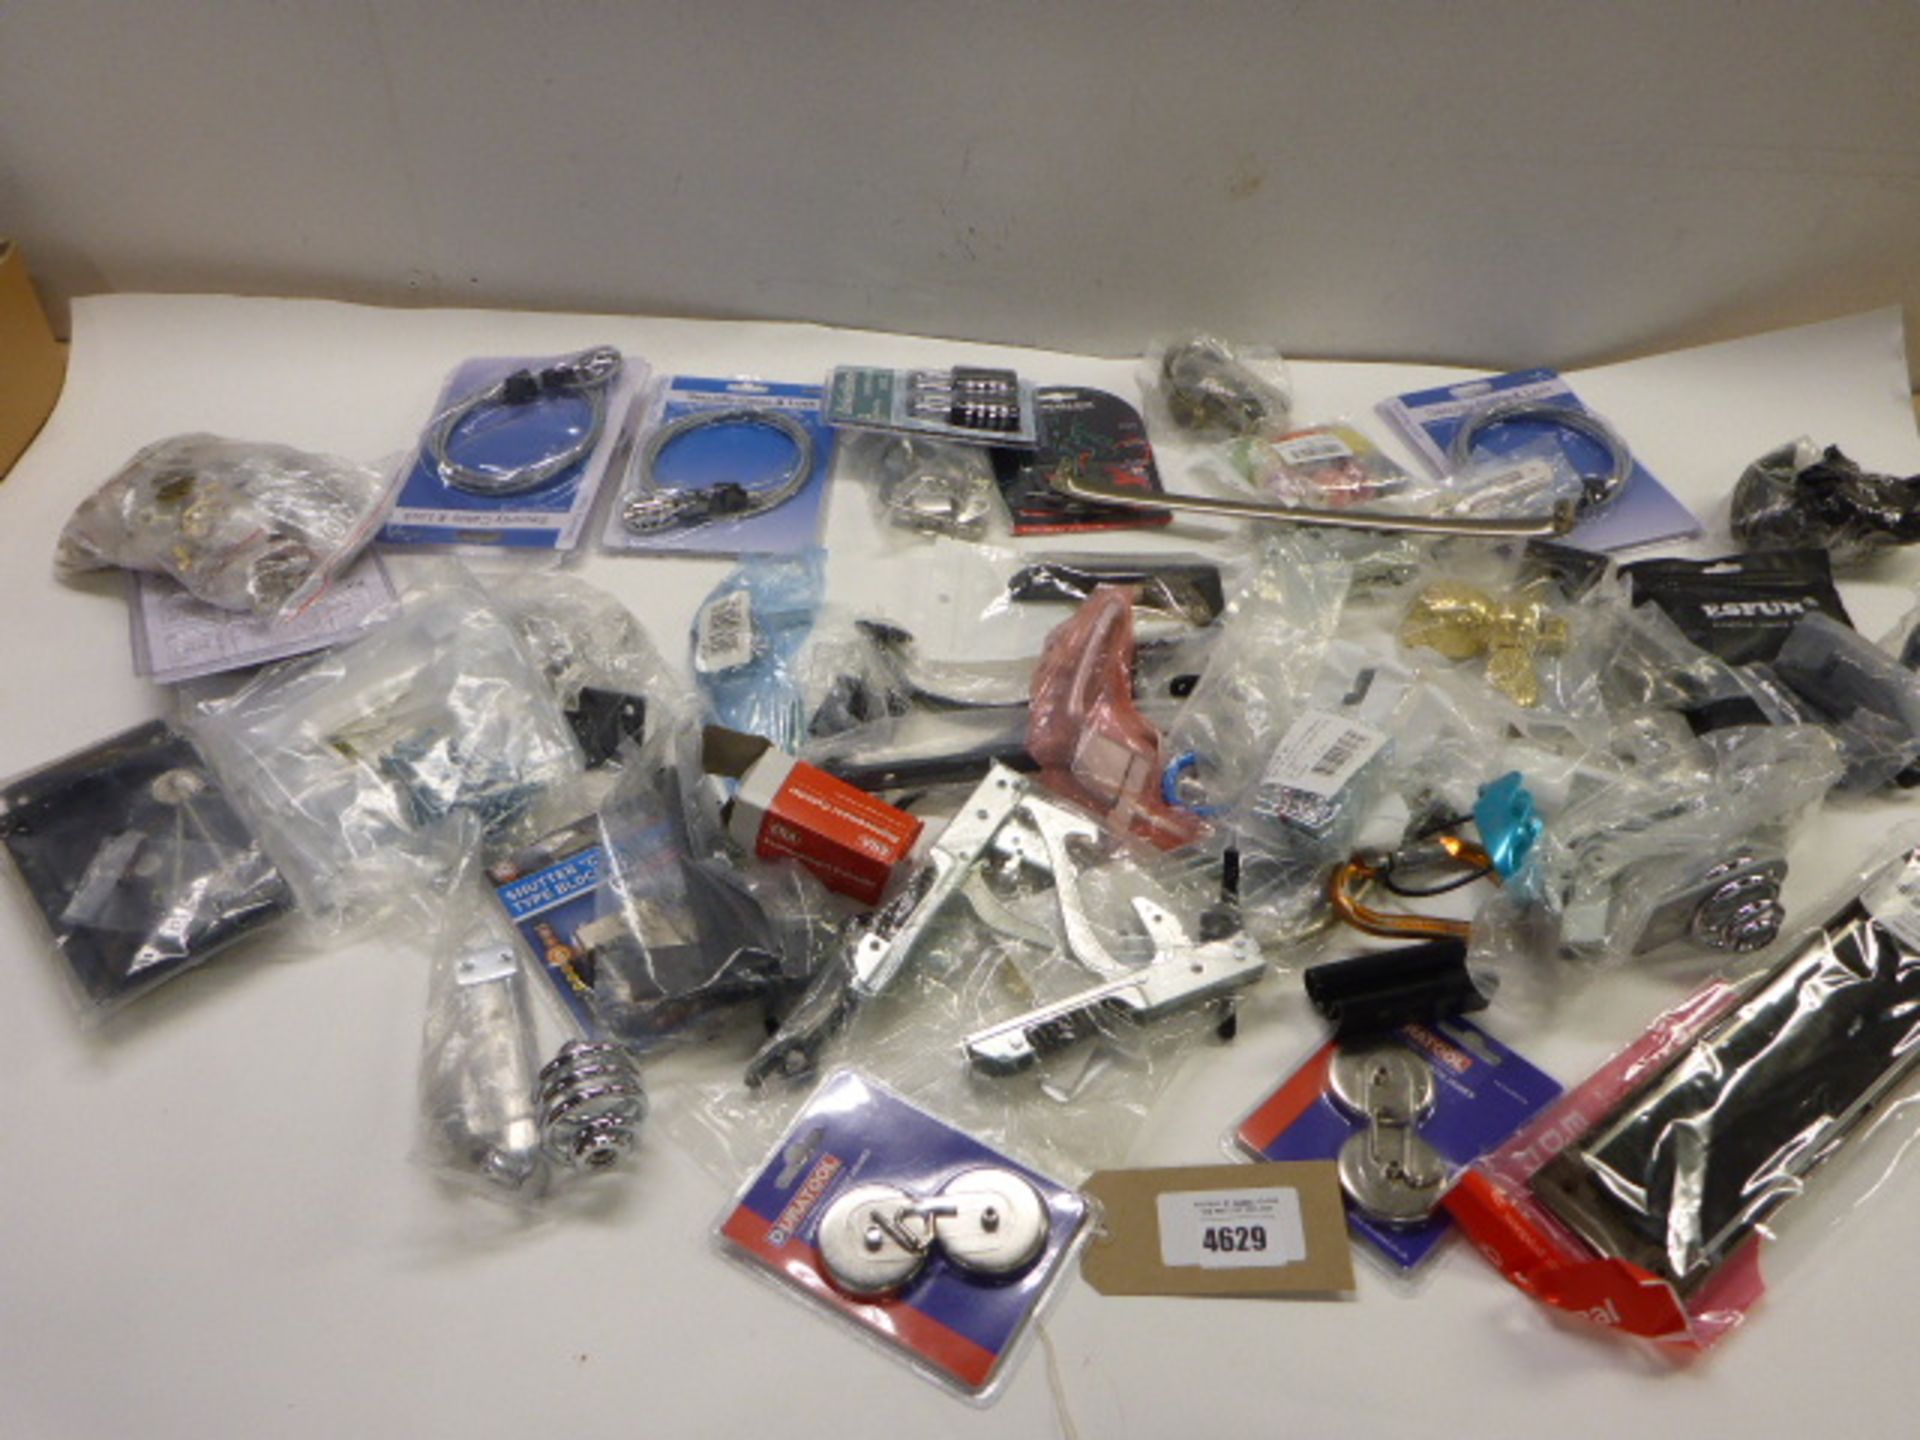 Bag containing locks, cylinders, magnetic hooks, brackets, padlocks, security cable locks, door